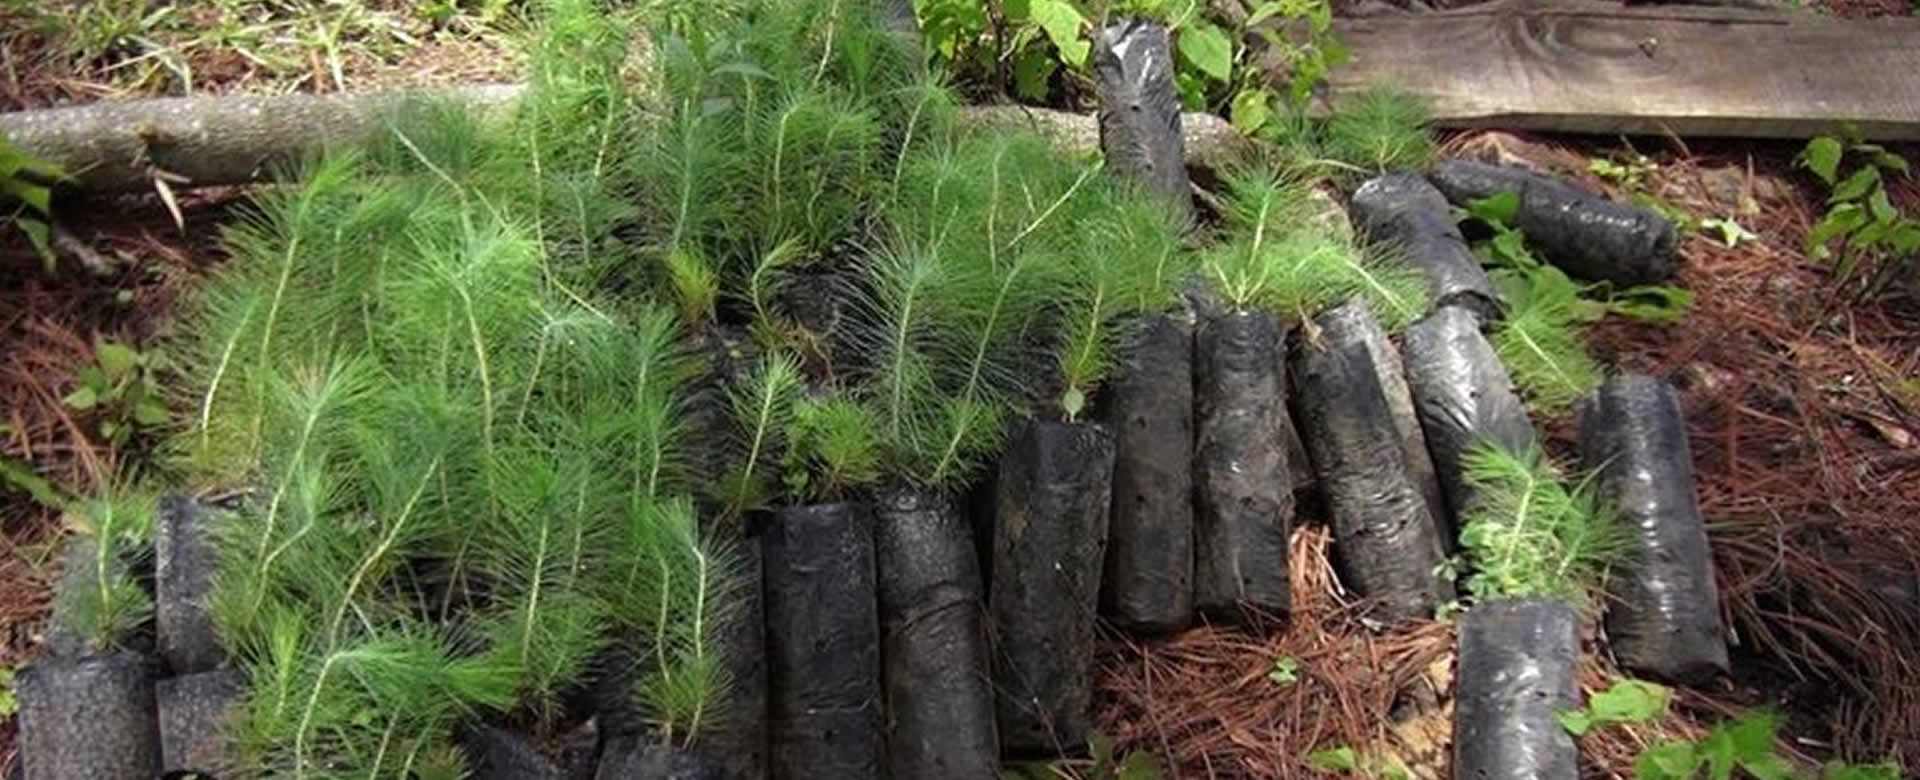 Tecnológico Nacional Olof Palme de Estelí realiza jornada de reforestación